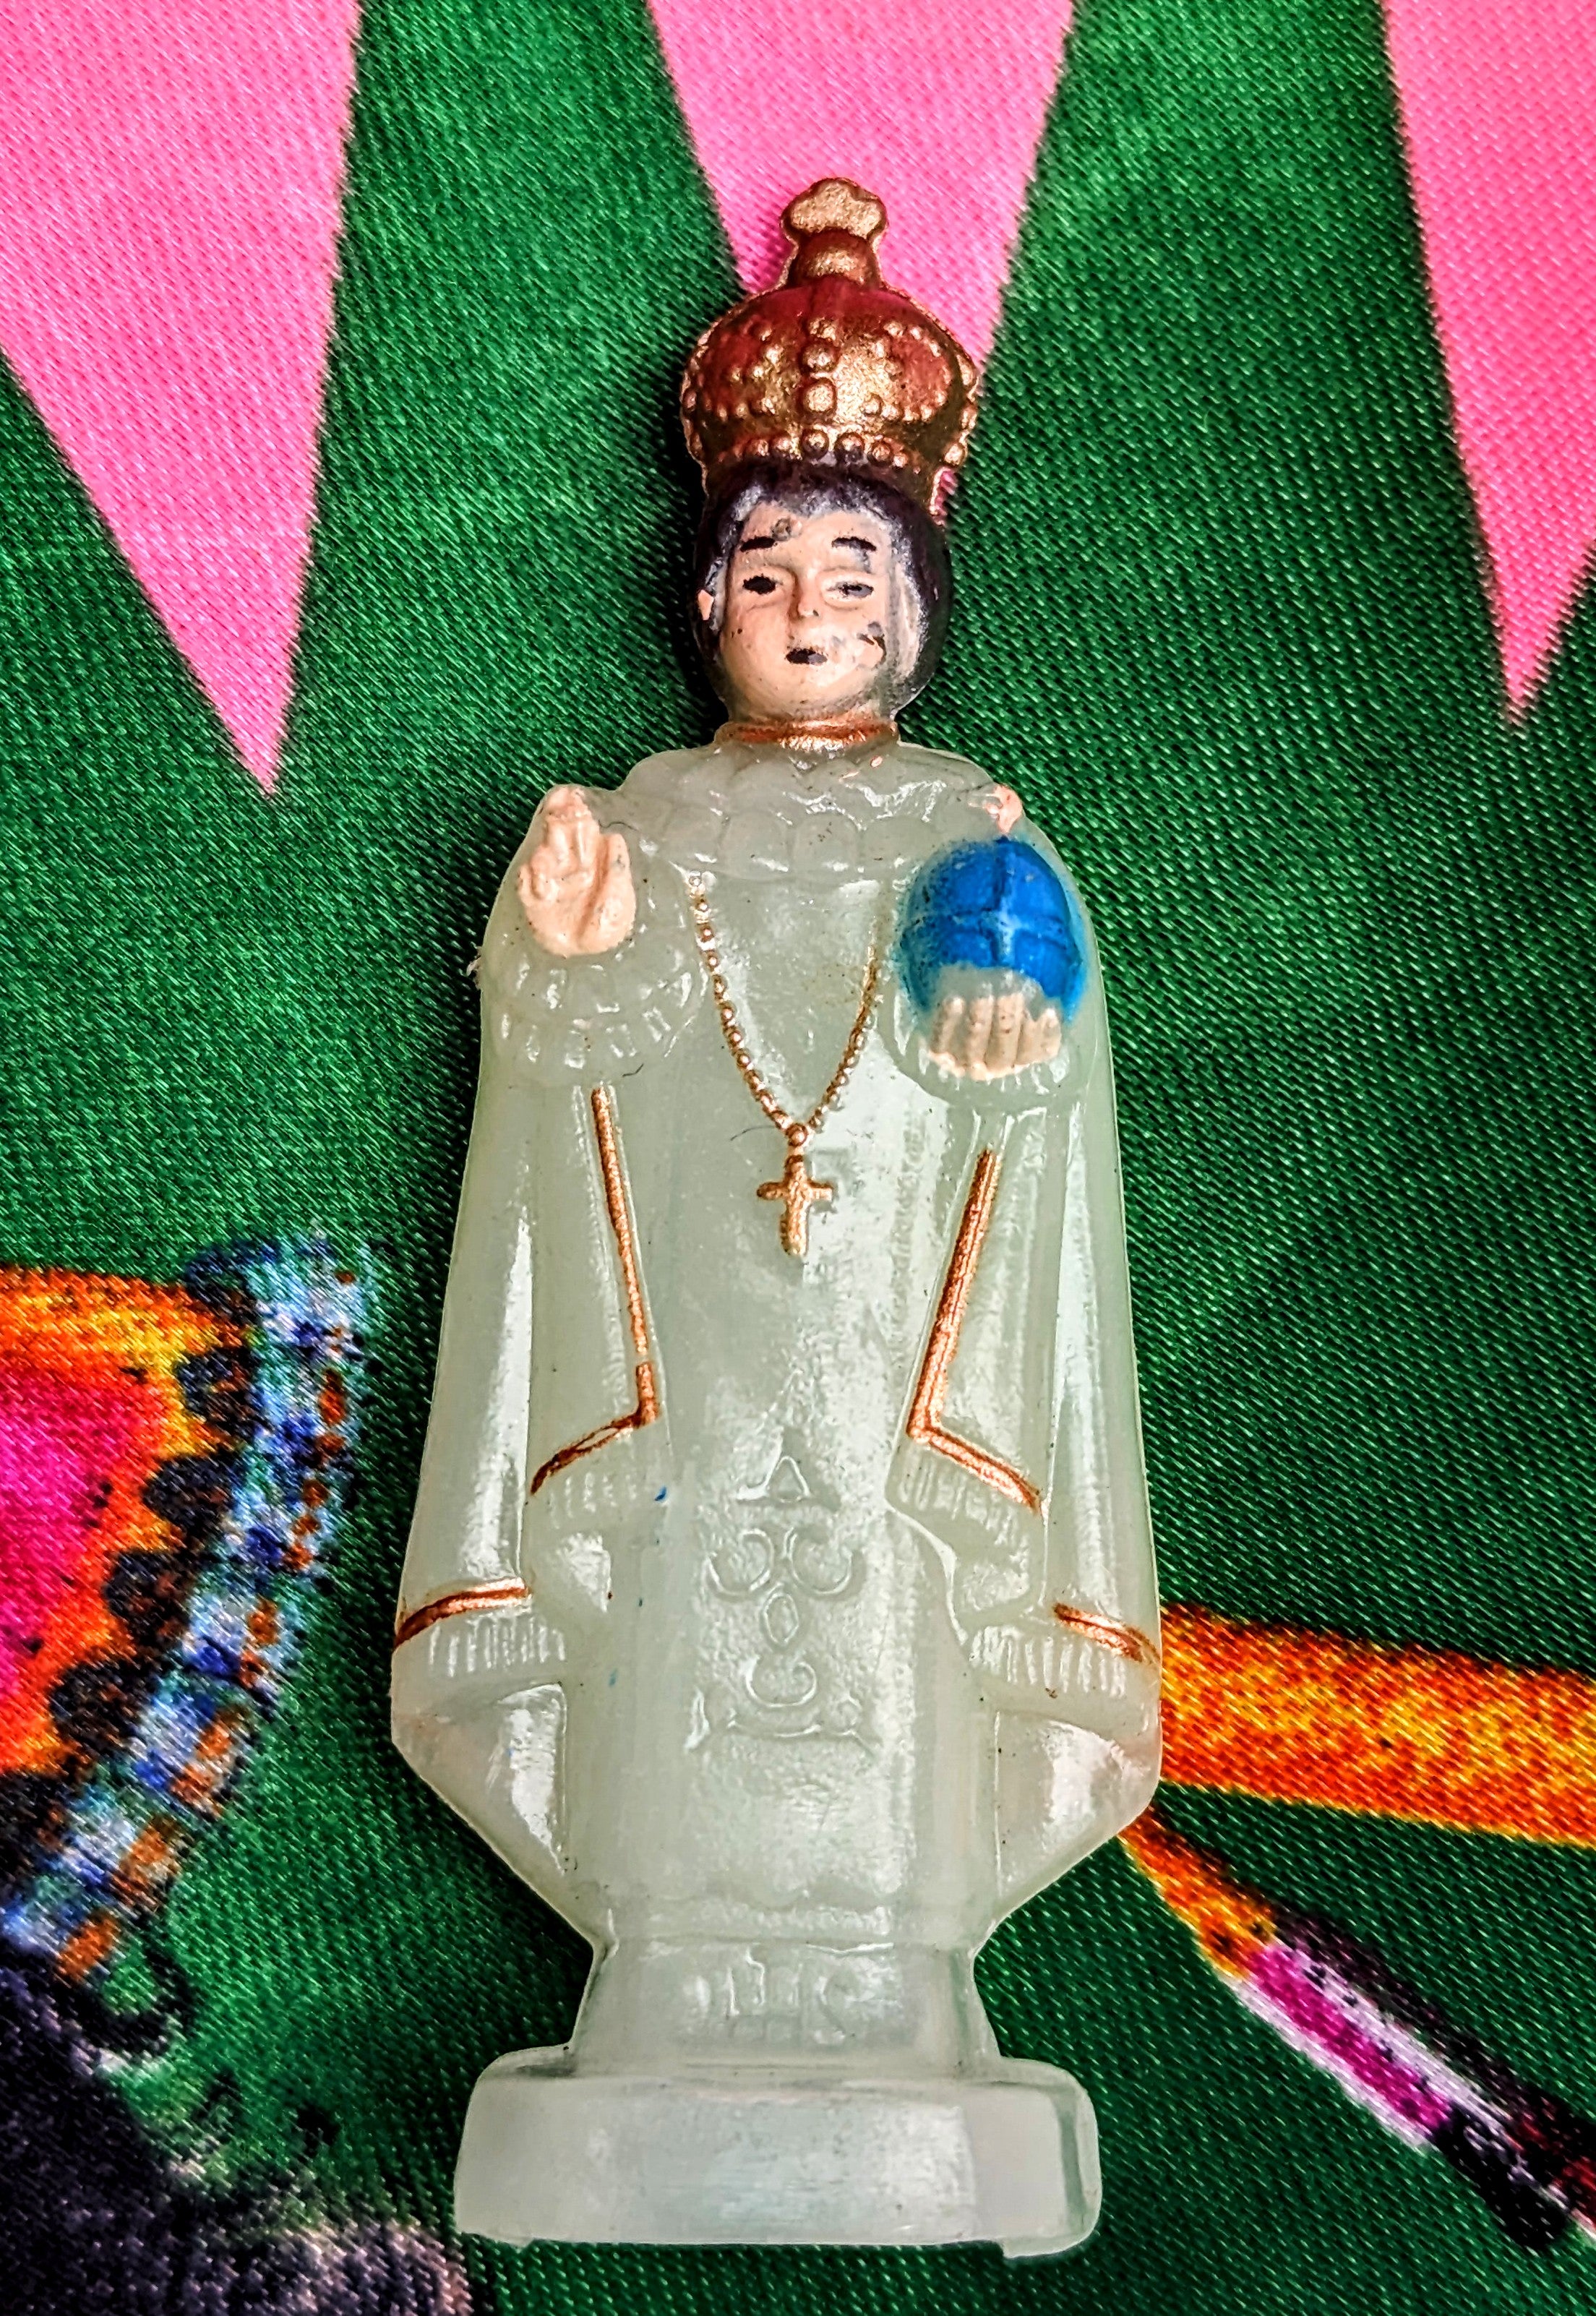 Mini religious statues